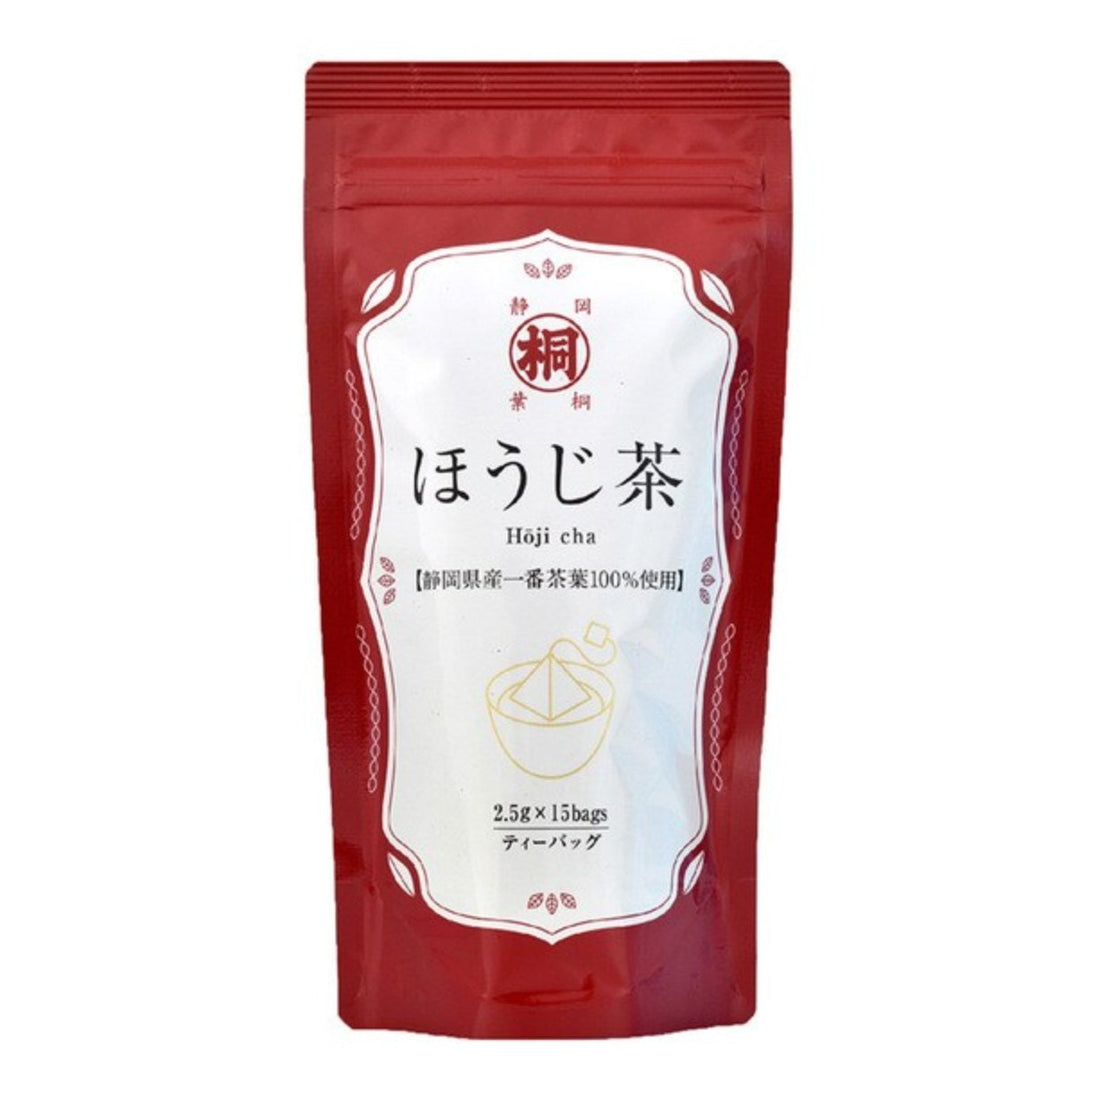 Hagiri Ichibancha Hojicha Tea Bags from Shizuoka 2.5g x 15 - NihonMura